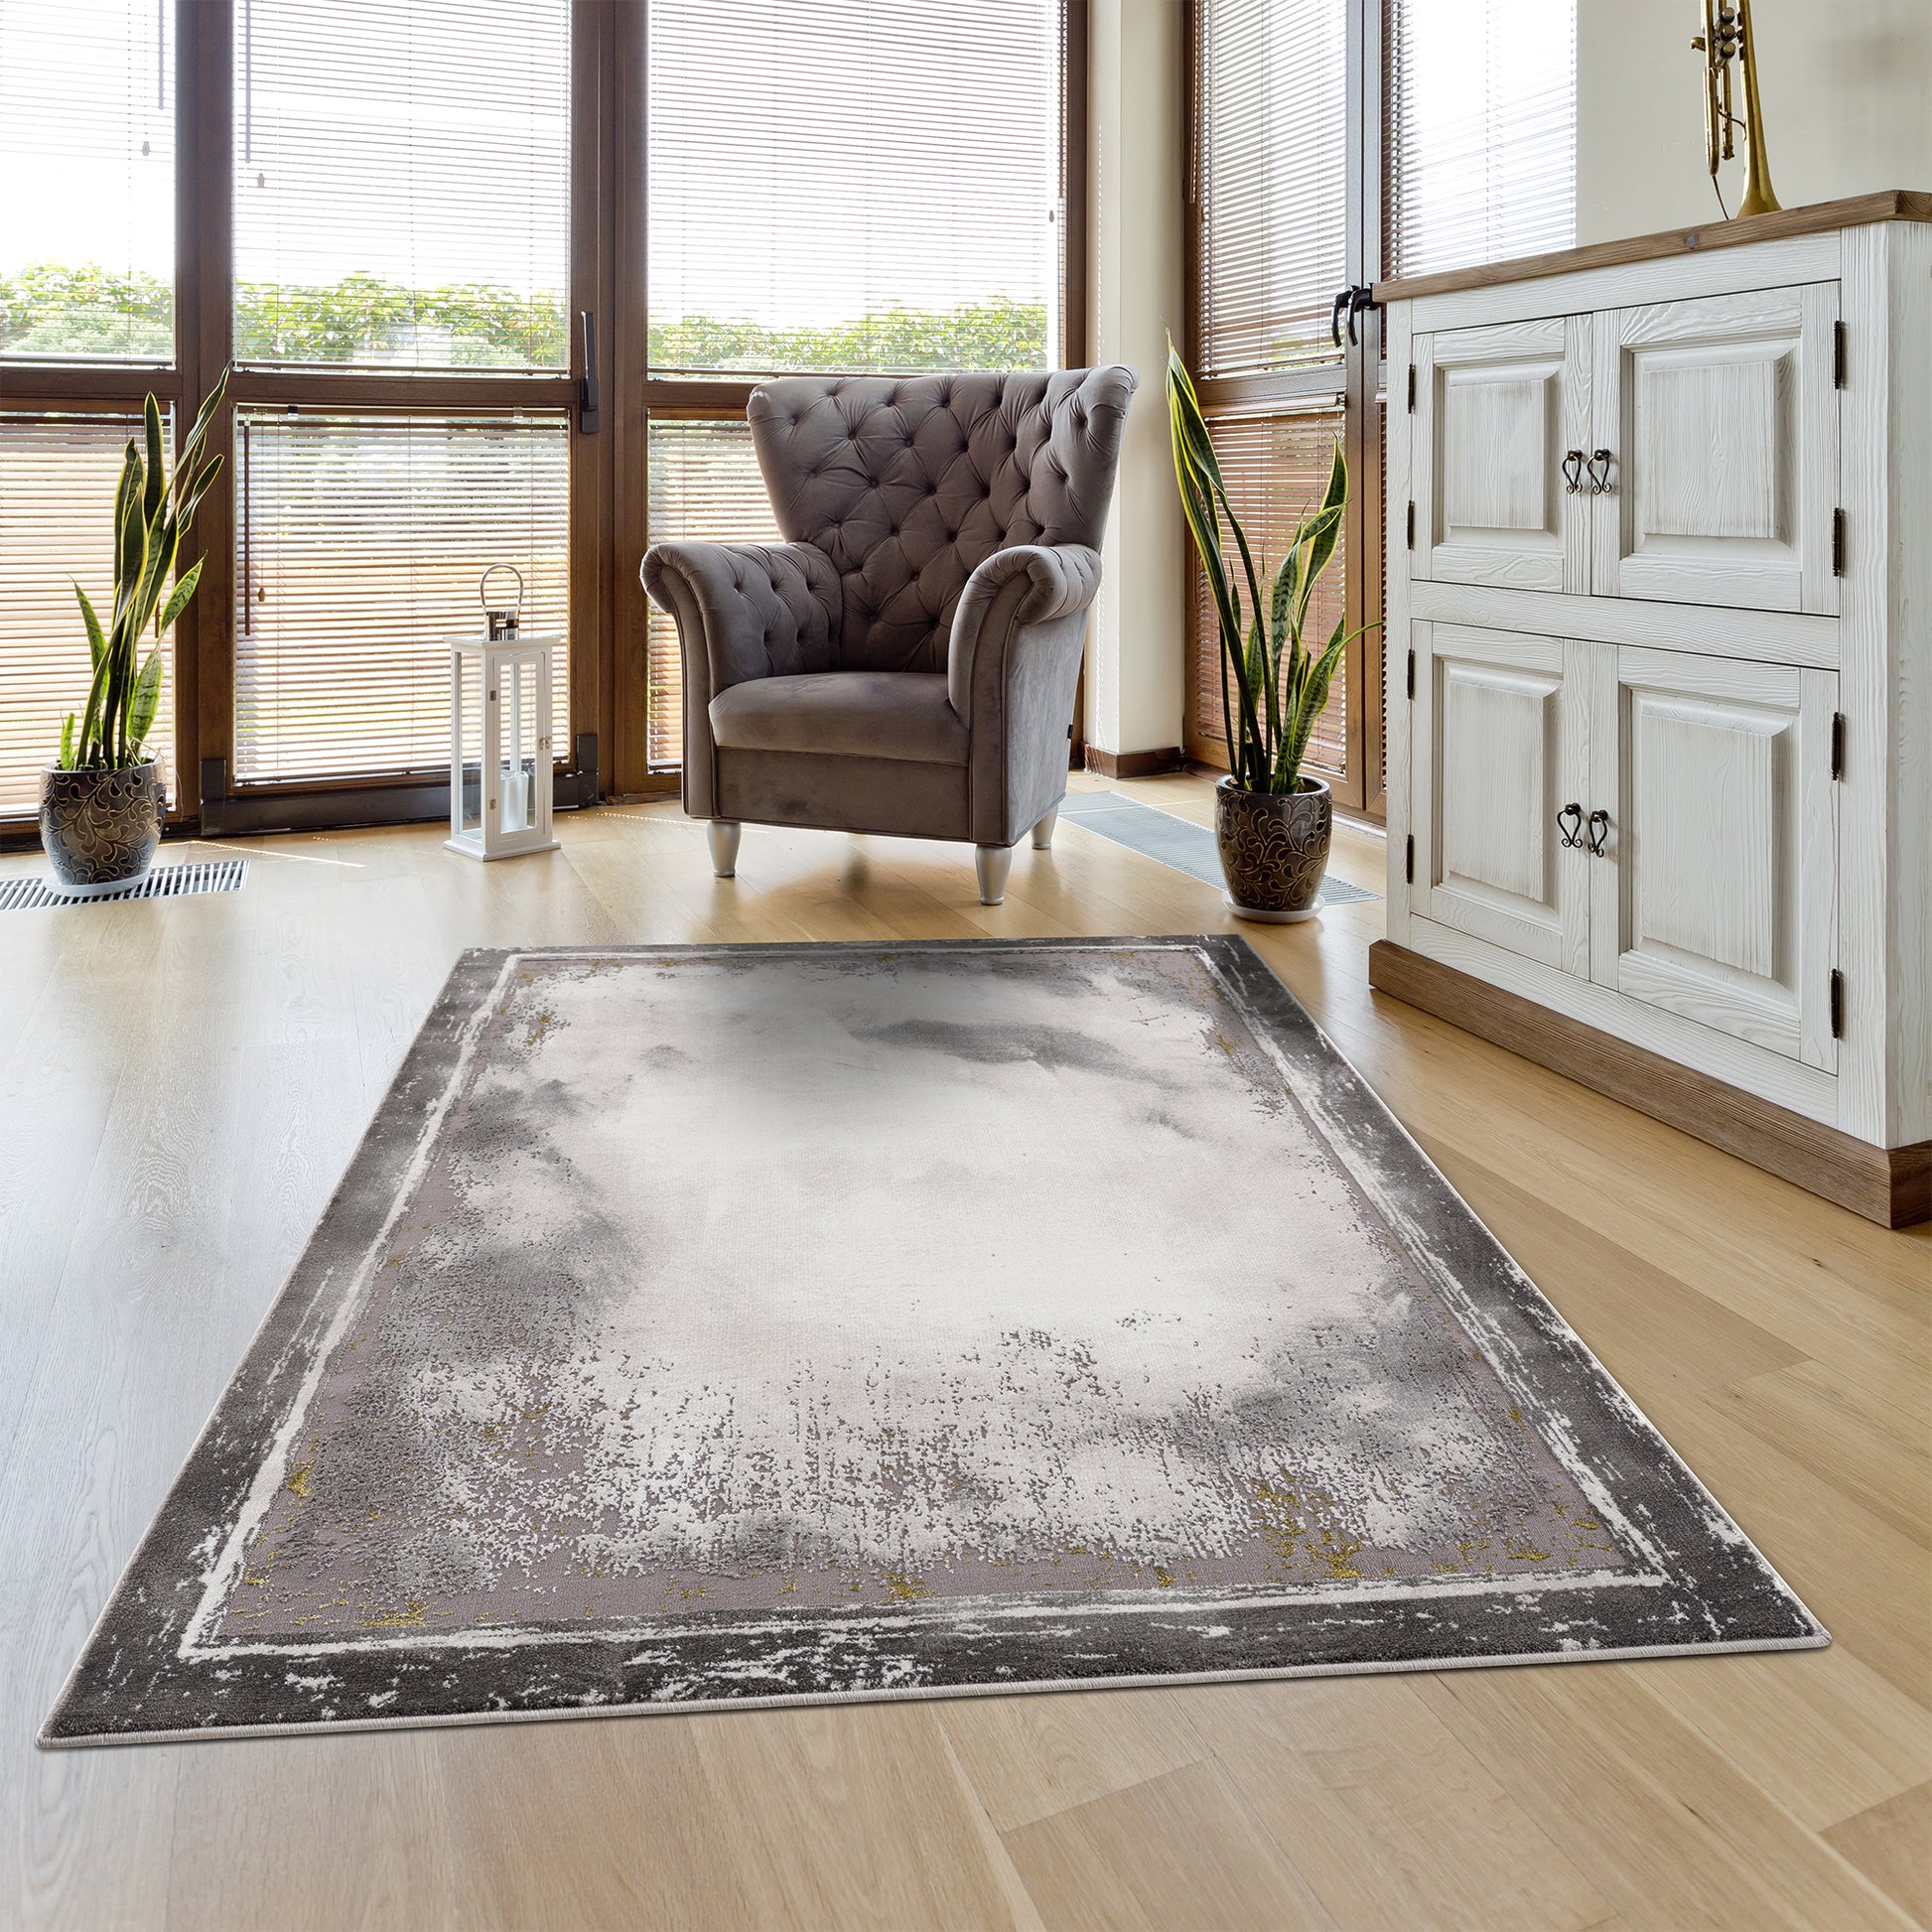 light dark grey beige modern abstract bordered rustic marble pattern area rug 9x12, 10x13 ft Large Big Carpet, Living Room, Beroom